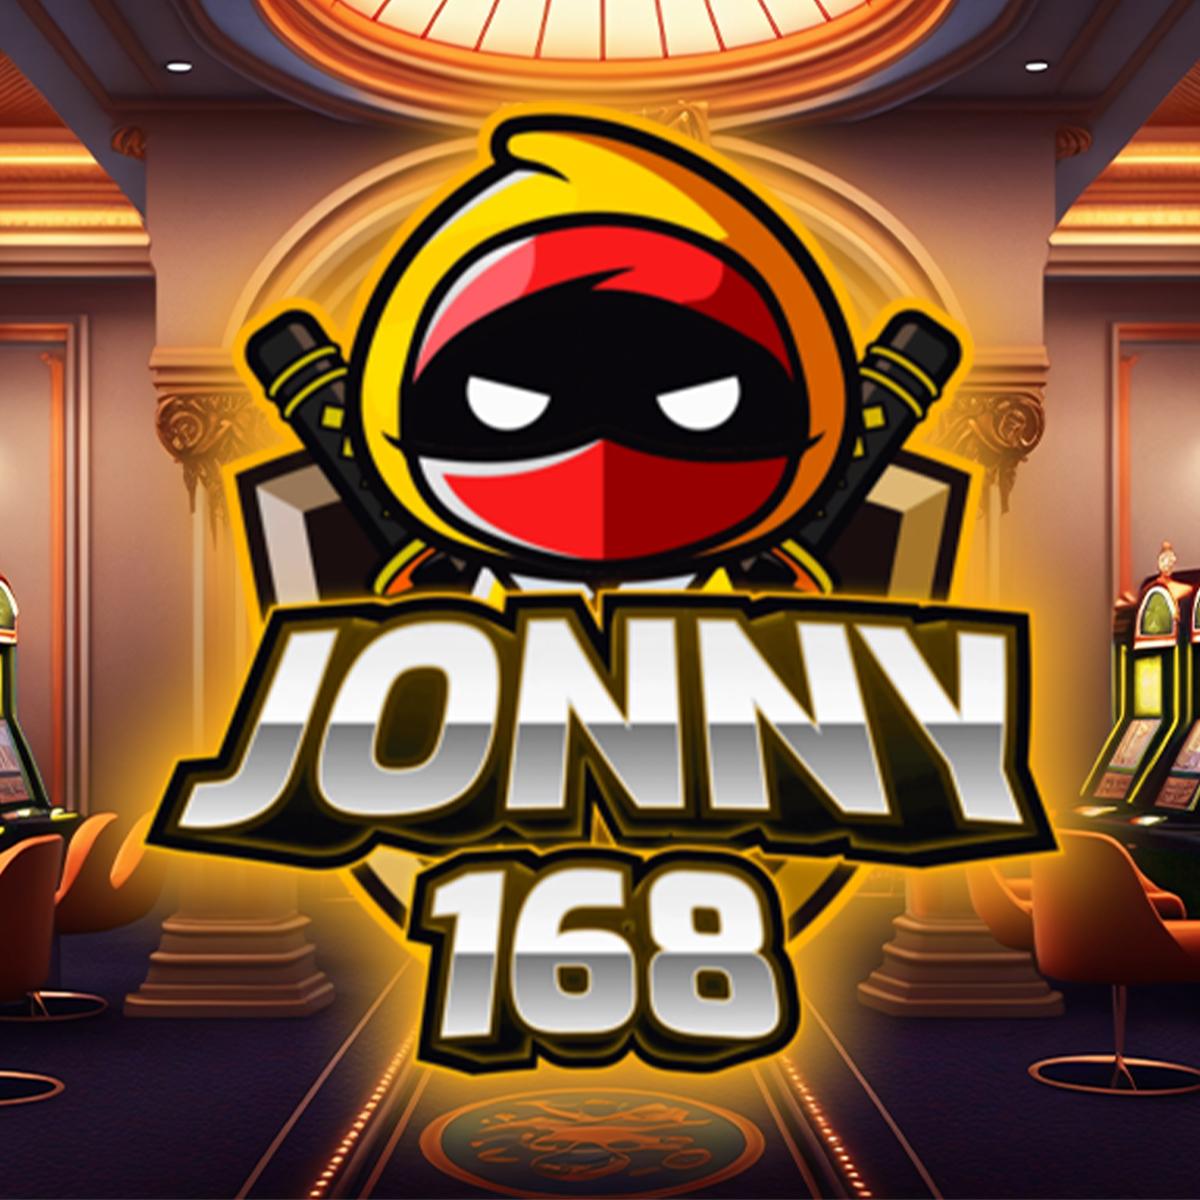 JONNY168